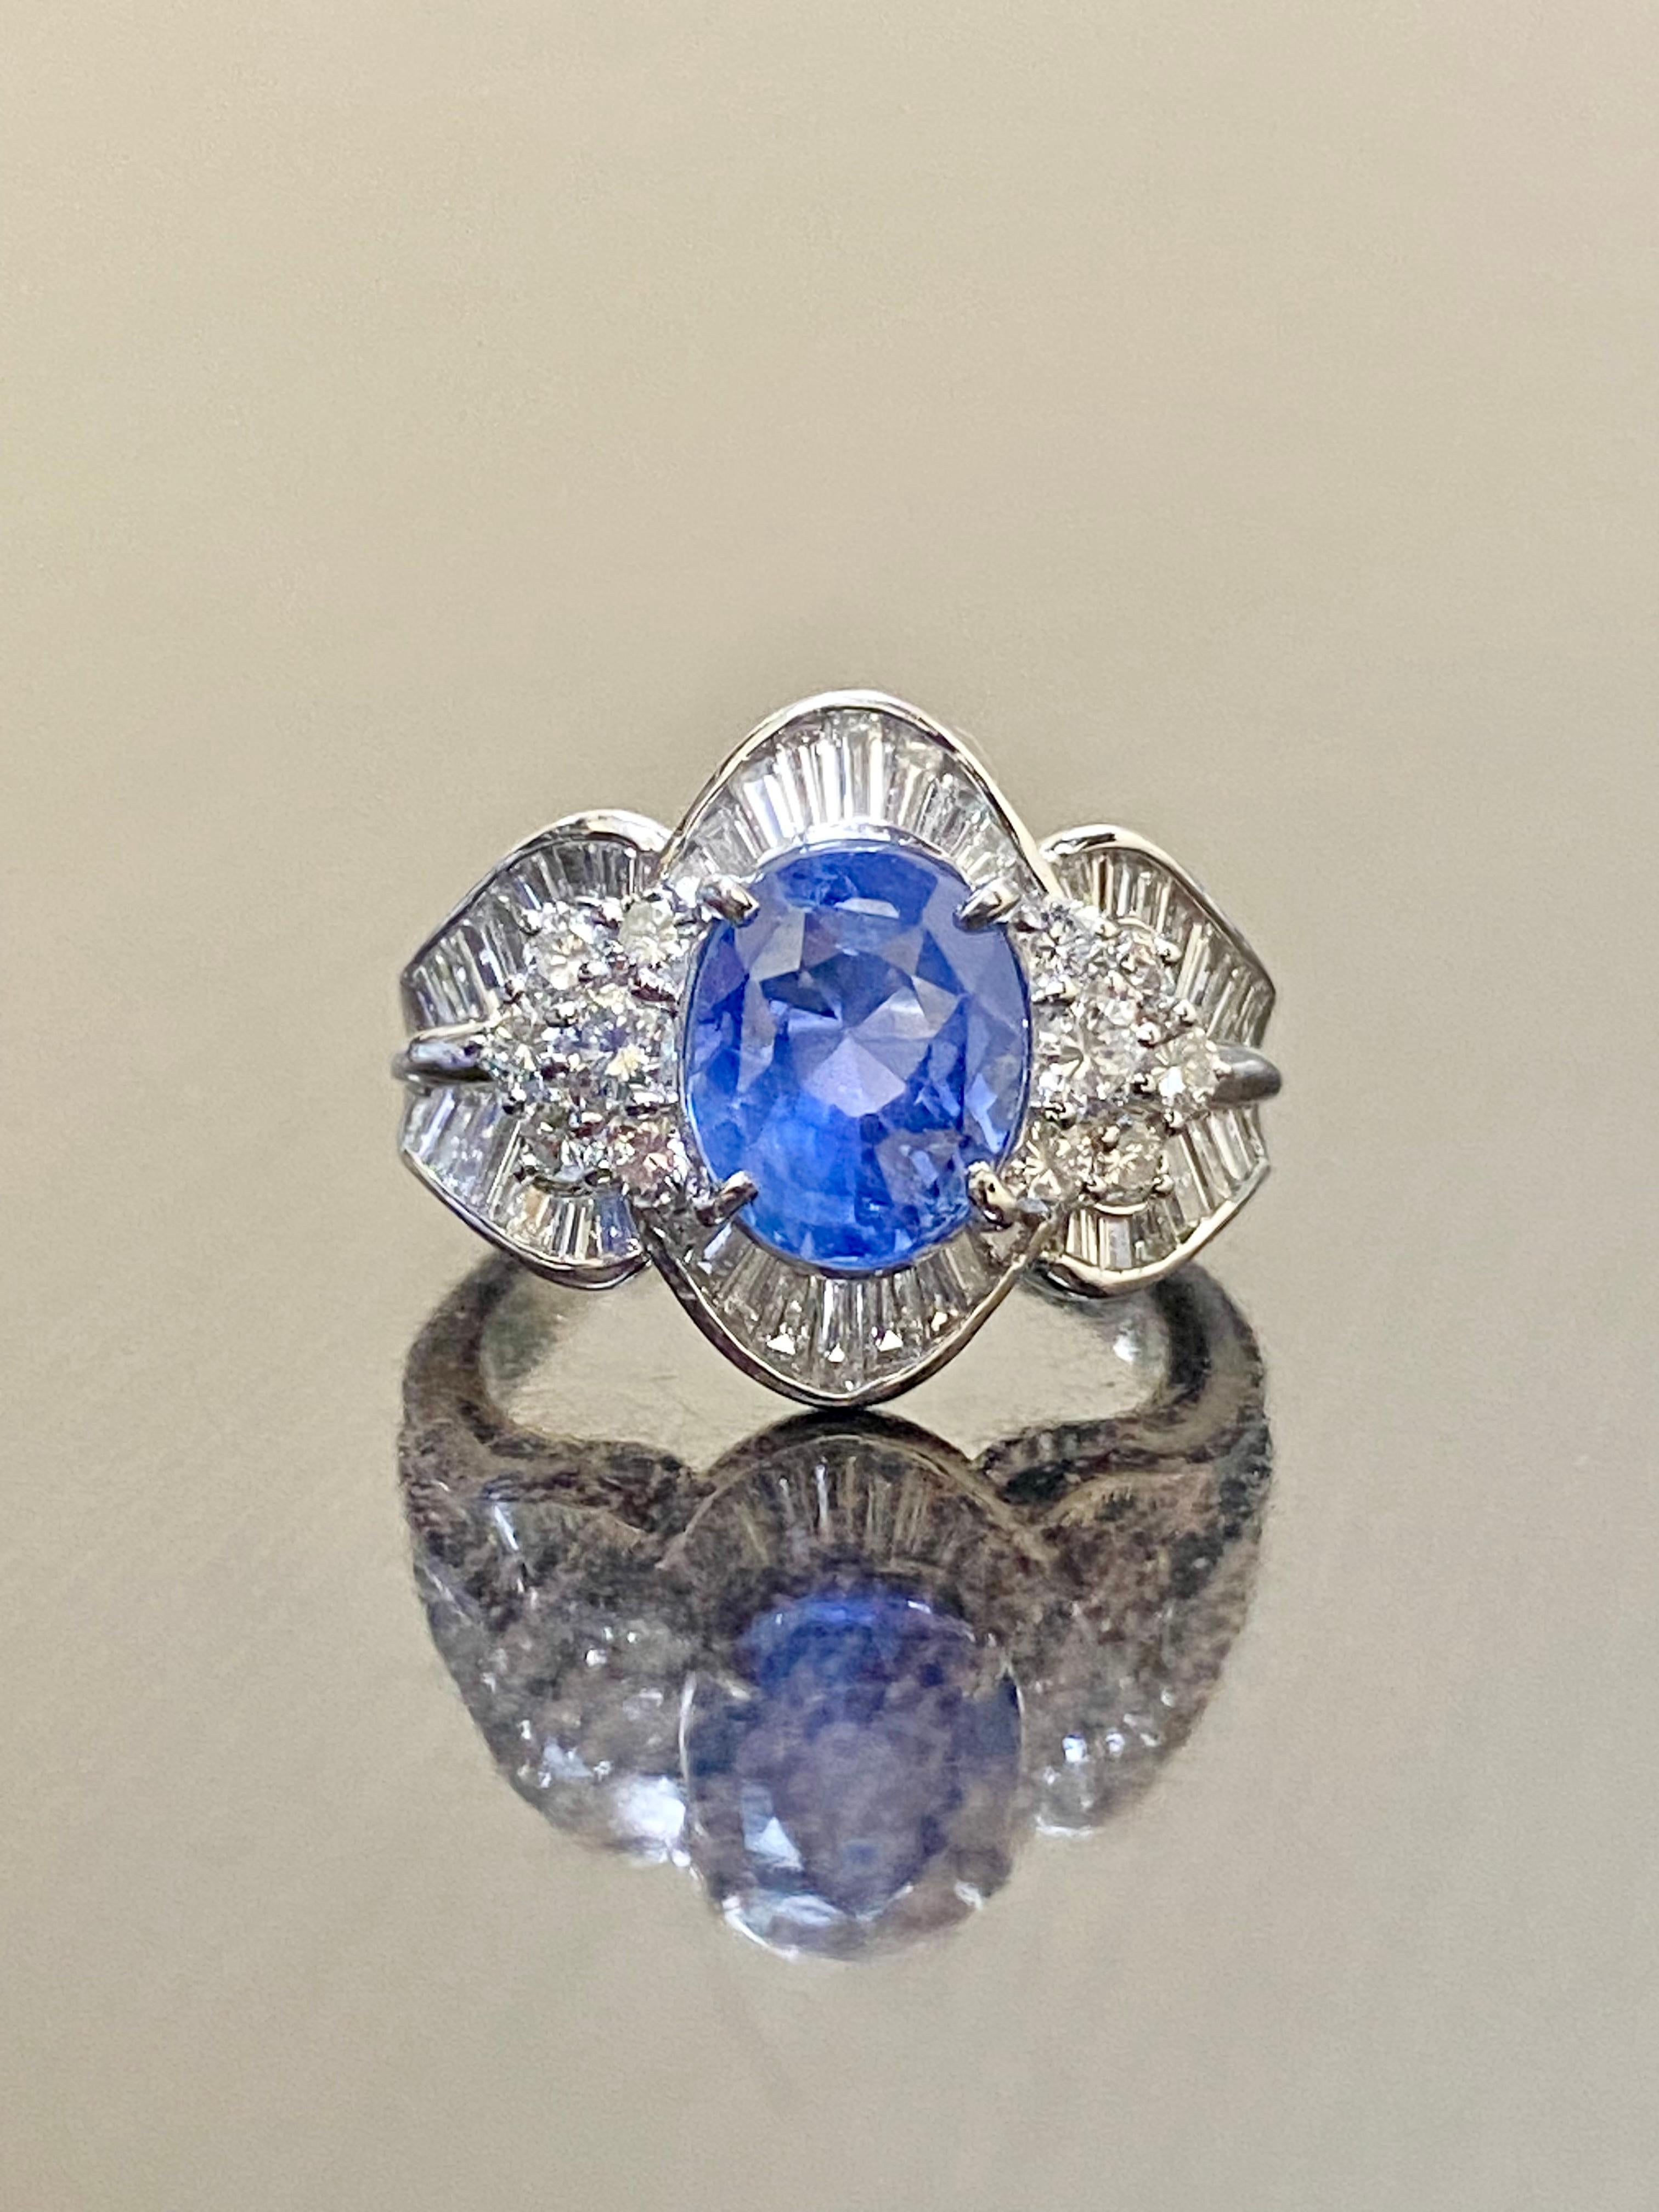 DeKara Designs Collection Masterpiece

Beautiful Modern/Art Deco Inspired Ceylon Blue Sapphire and Diamond Ring.

Metal- 90% Platinum, 10% Iridium. 

Stones- GIA Certified Oval No Heat Sri Lanka Sapphire 4.05 Carats.  50 Baguette Diamonds, 12 Round